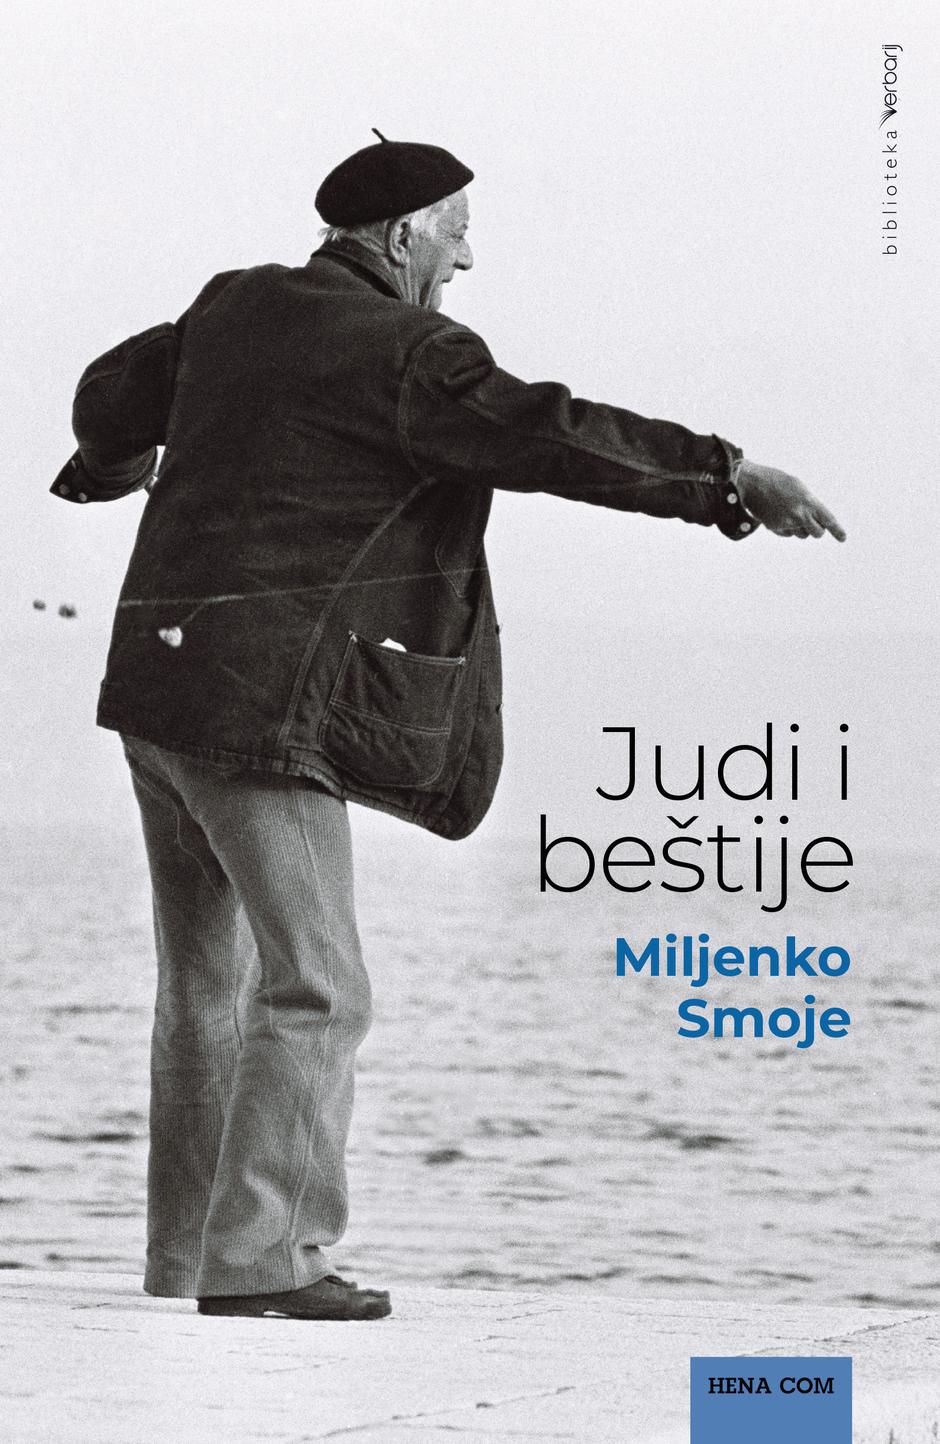 Miljenko Smoje | Author: Hena